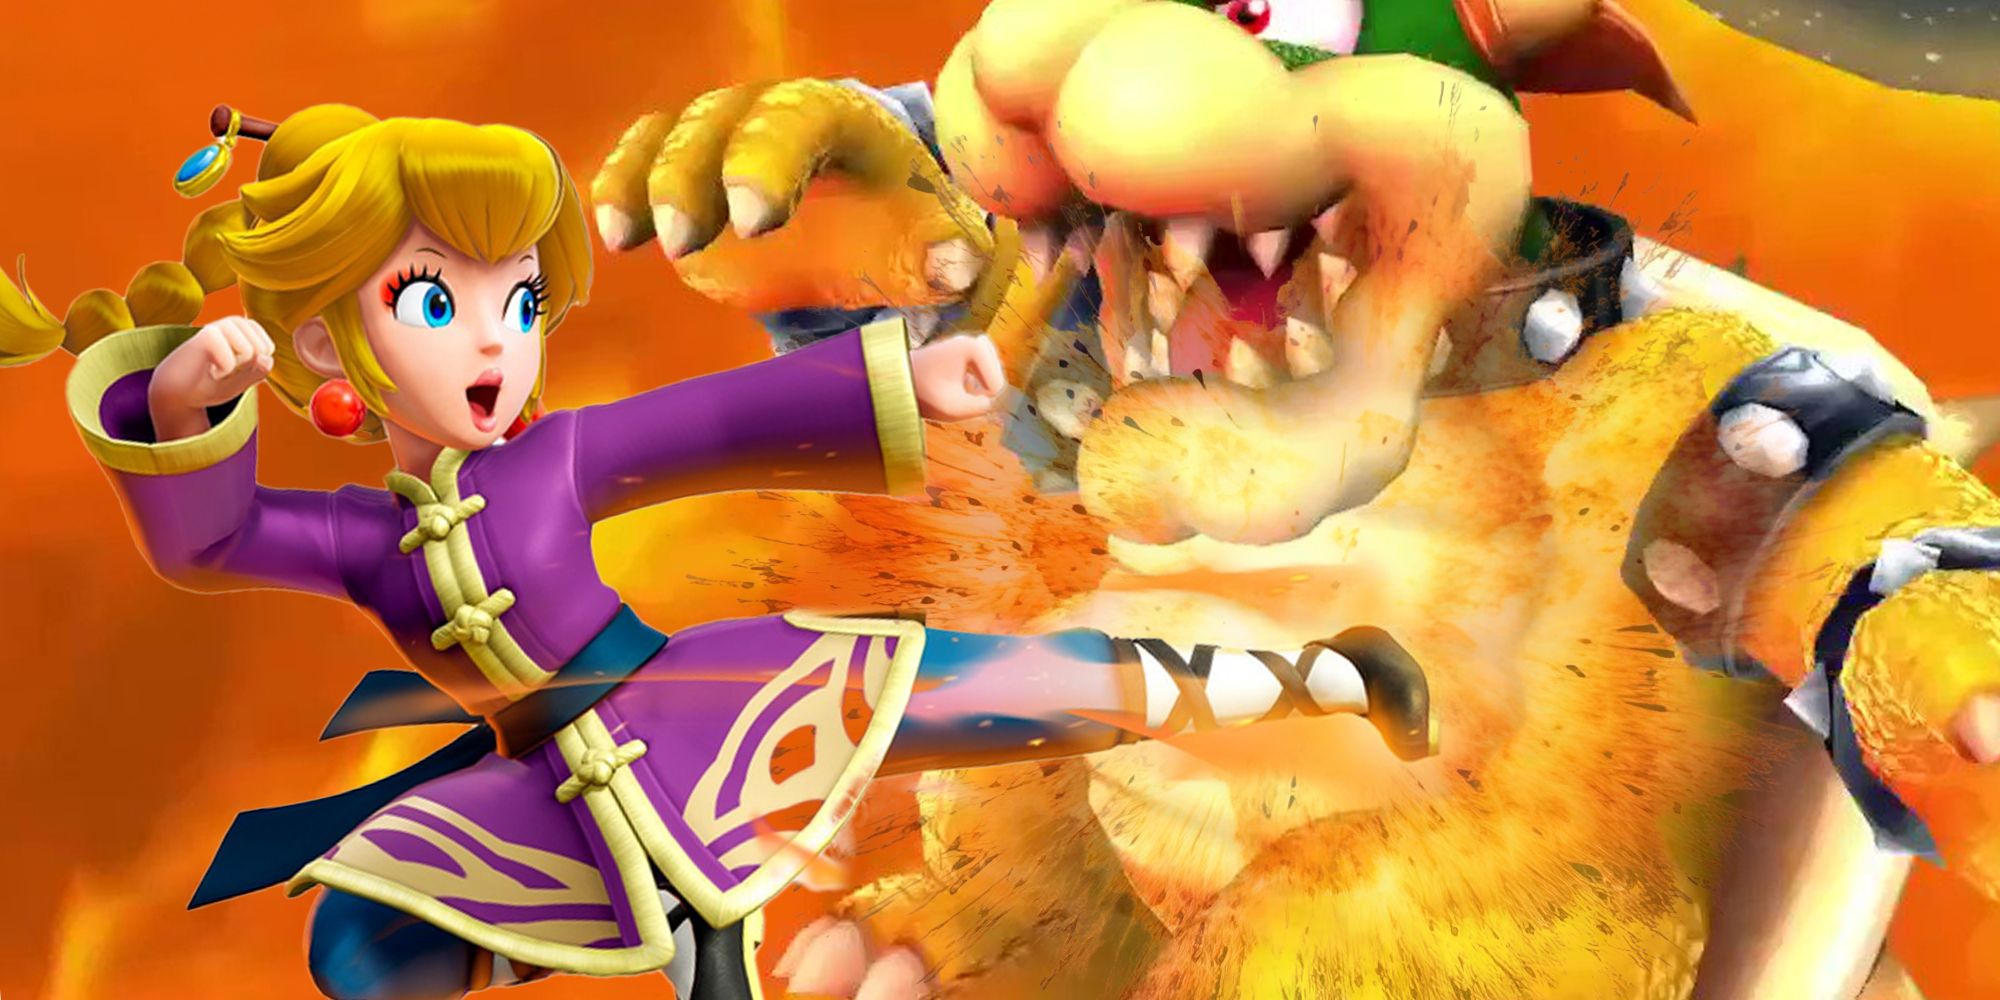 Princess Peach: Showtime!' Is Nintendo's Latest Mario-World Offering